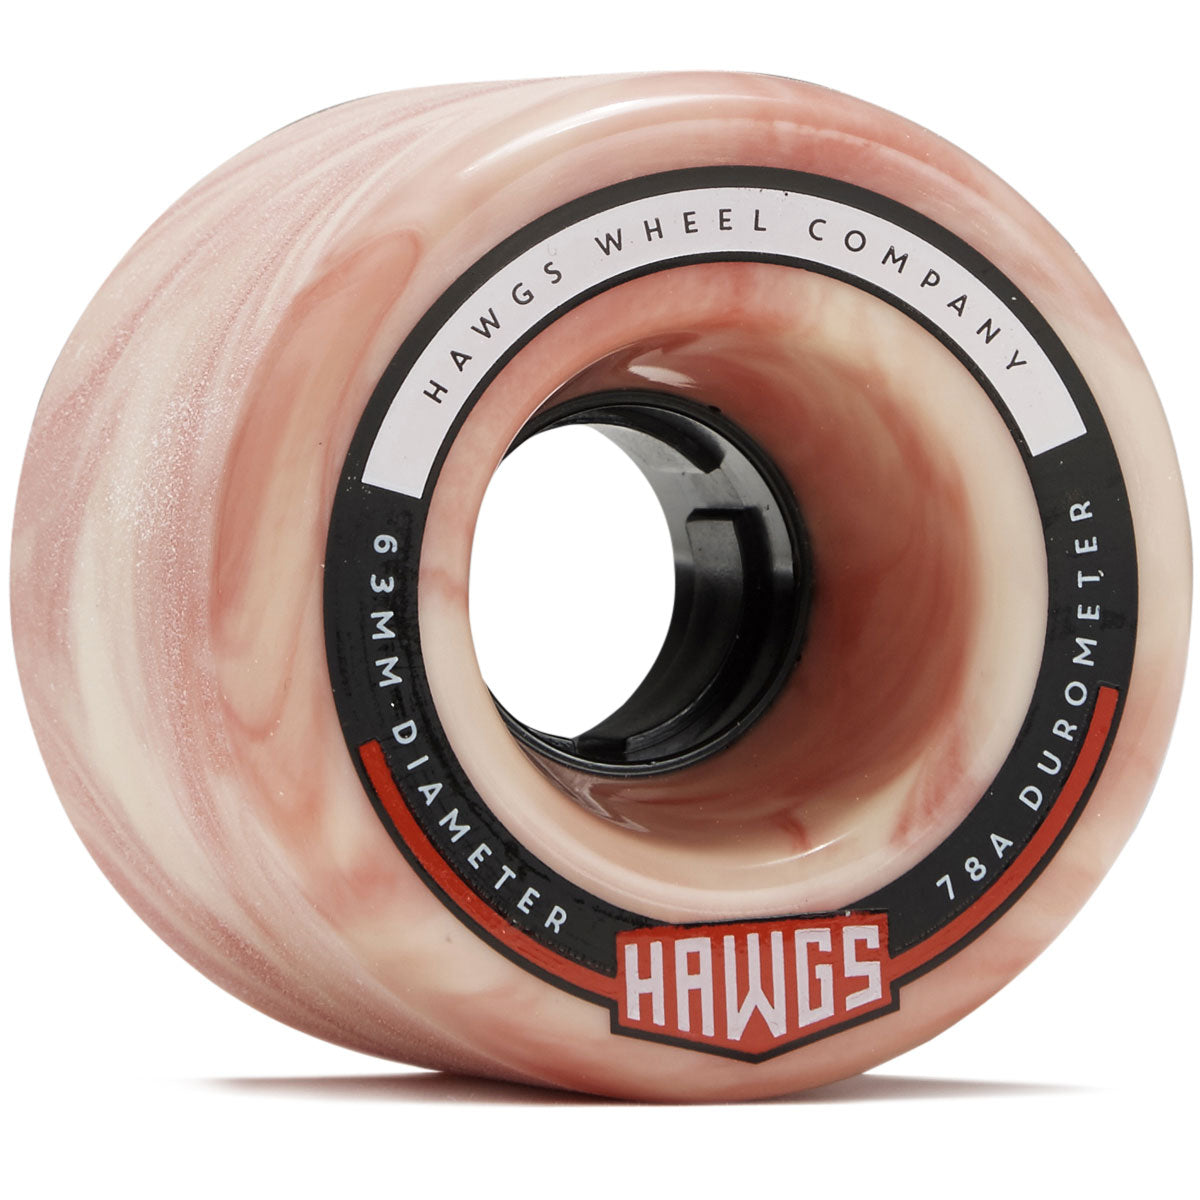 Hawgs Fatties 78a Stone Ground Longboard Wheels - Pink/White - 63mm image 1